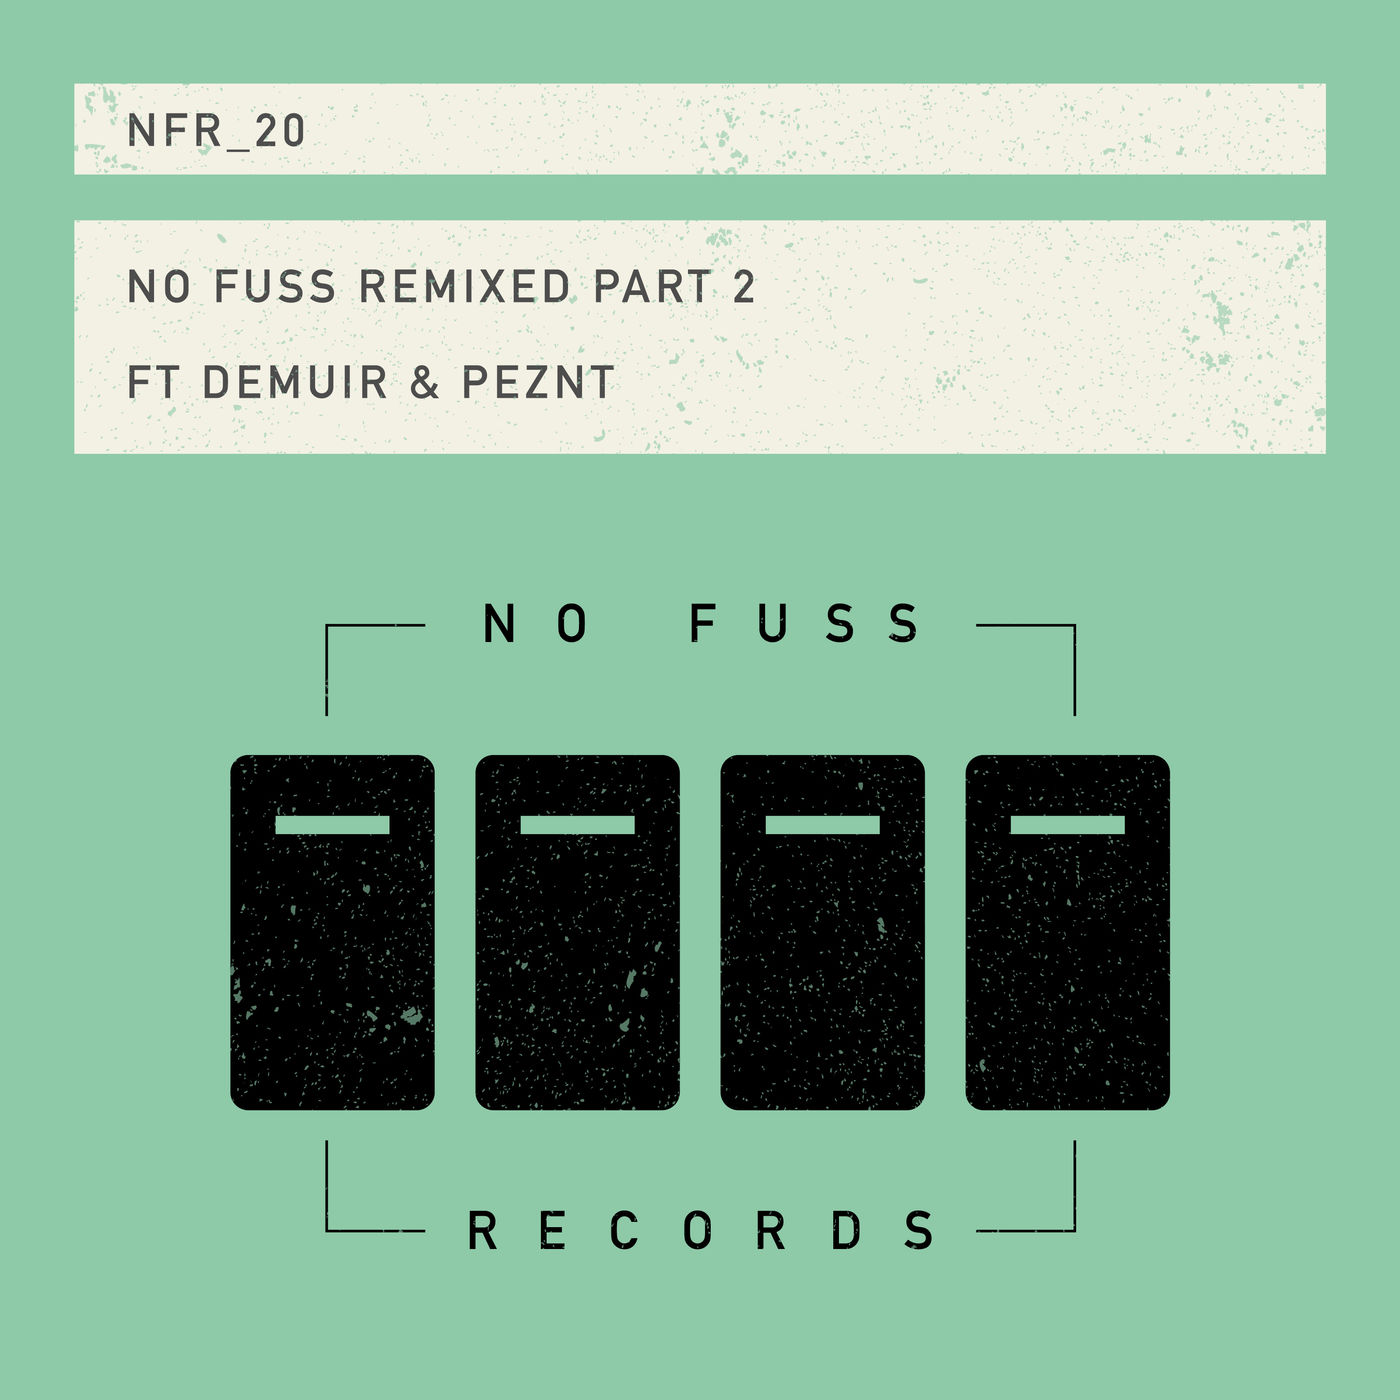 Saison & Risk Assessment - No Fuss Remixed Part 2 / No Fuss Records